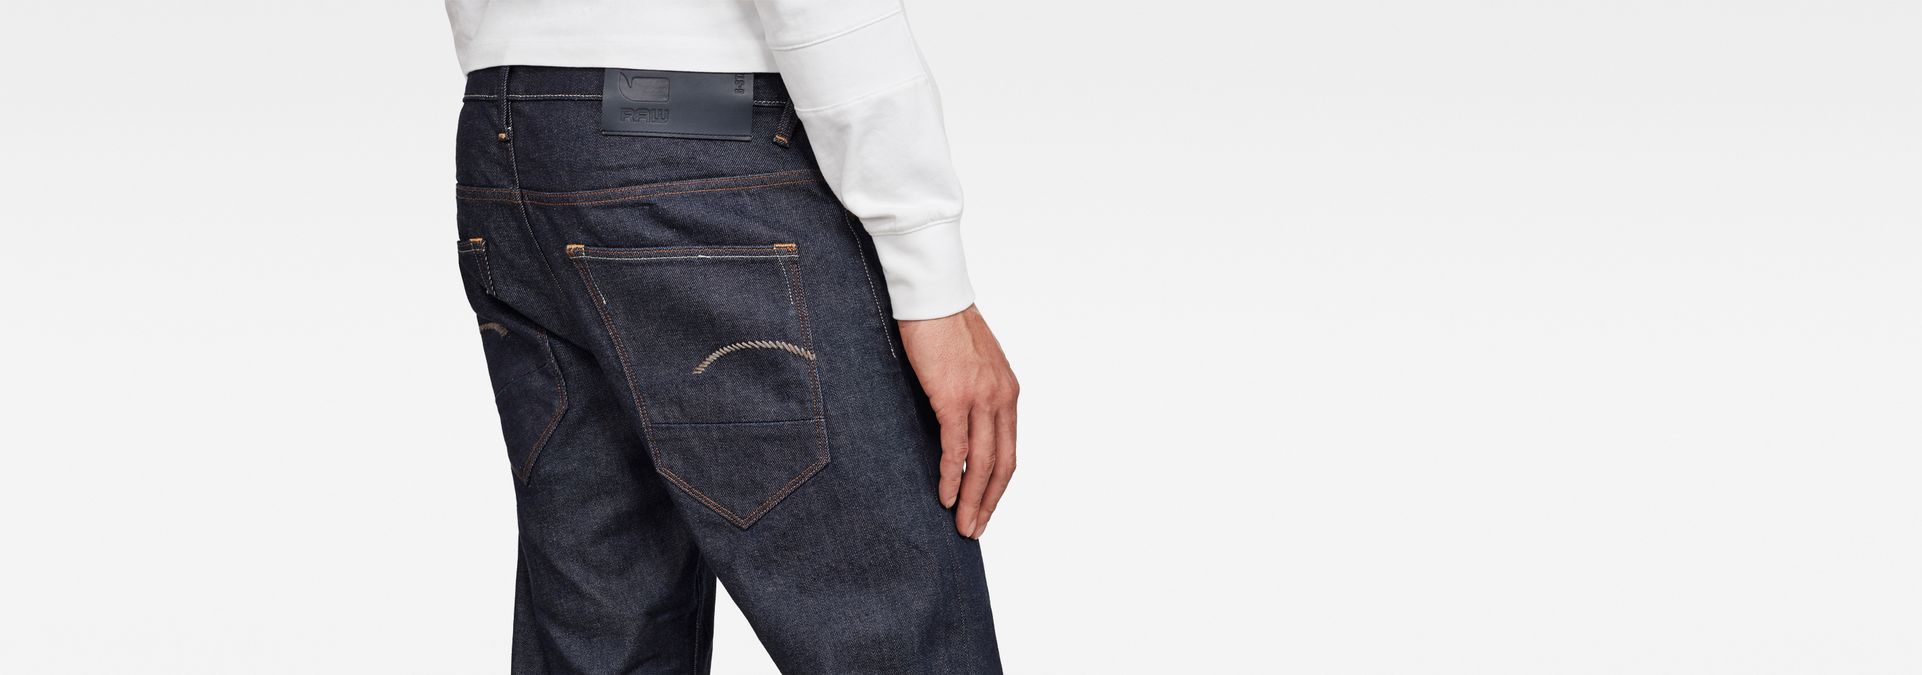 G-Star RAW Denim Morry 3d Relaxed Tapered Jeans in het Blauw voor heren Bespaar 1% Heren Kleding voor voor Jeans voor Tapered jeans 